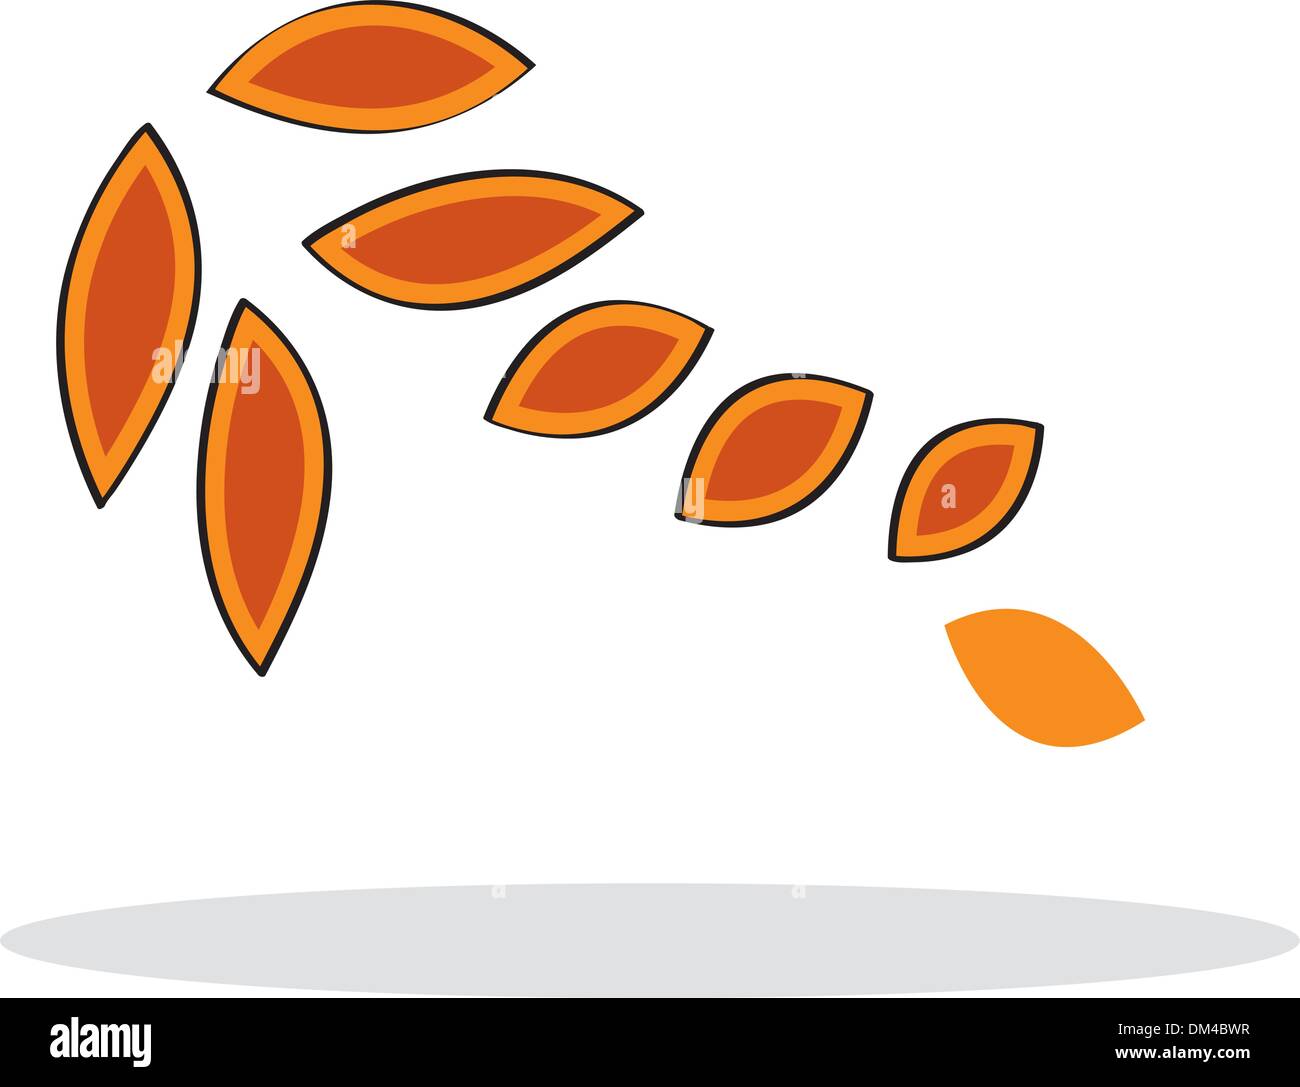 Orange leaf with grey shadow Stock Vector